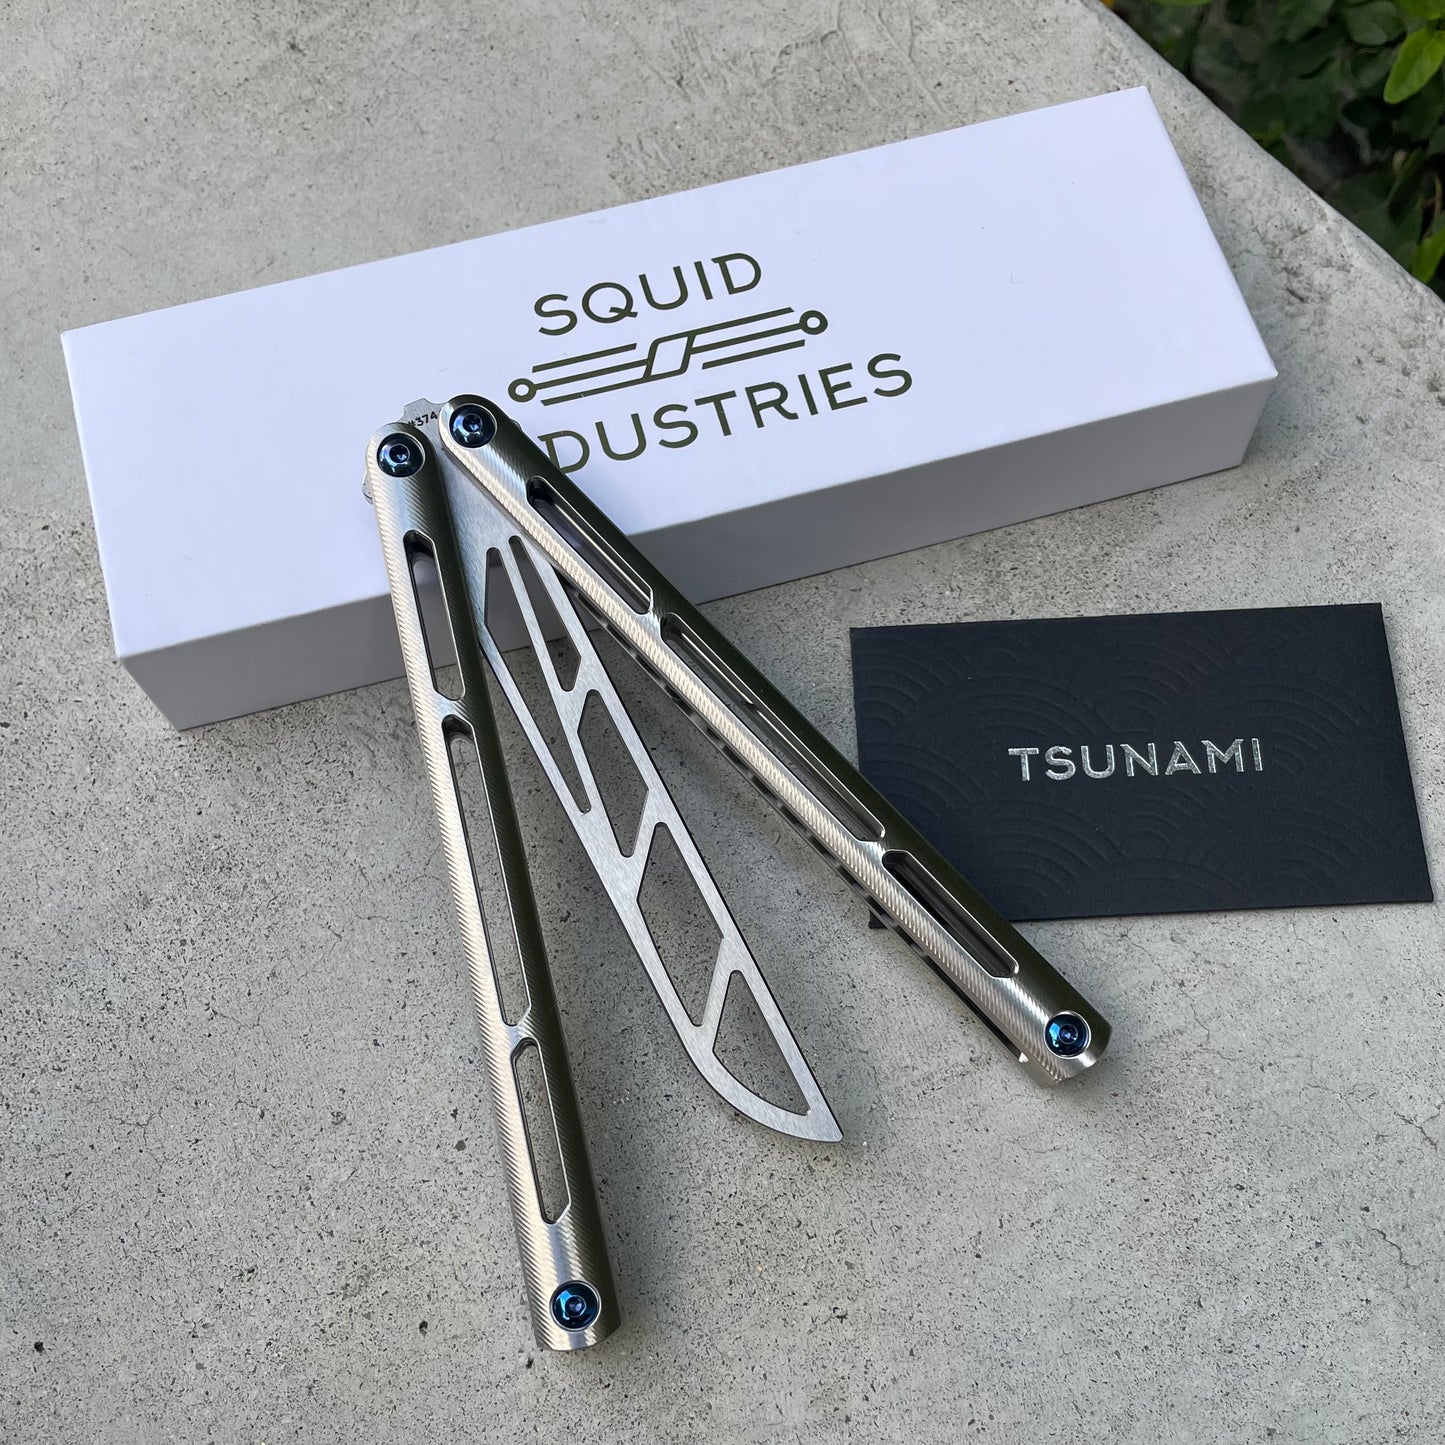 Squid Industries Tsunami Trainer